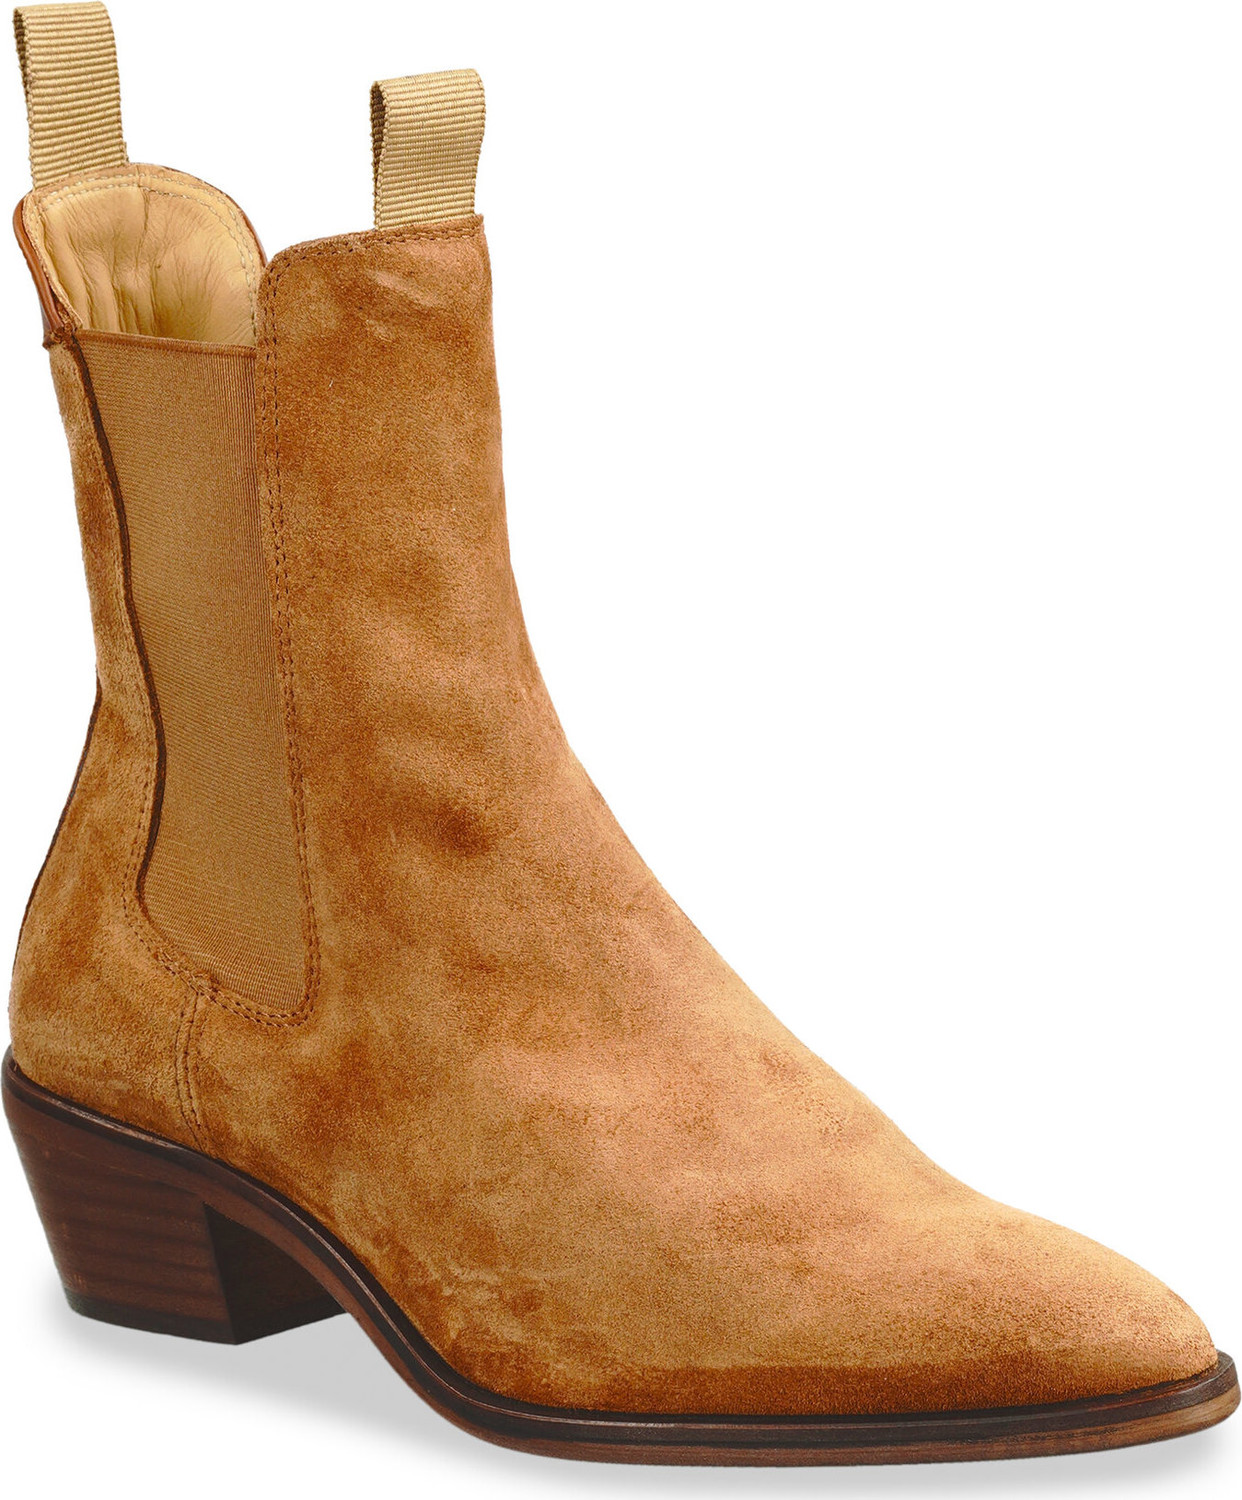 Kotníková obuv s elastickým prvkem Gant St. Broomly Chelsea Boot 27553373 Cognac